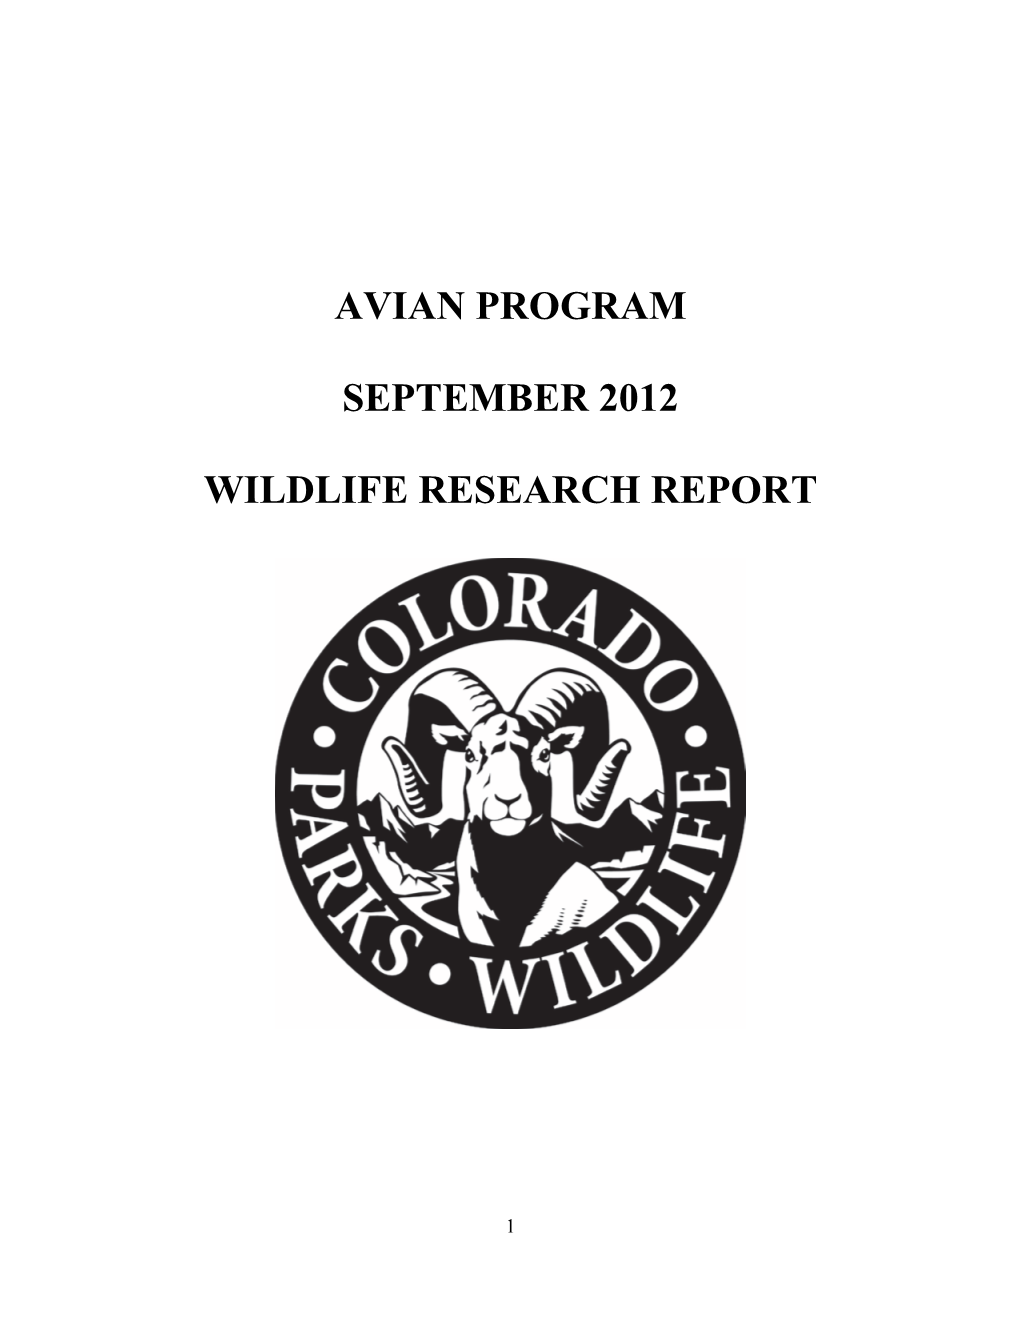 Avian Program September 2012 Wildlife Research Report